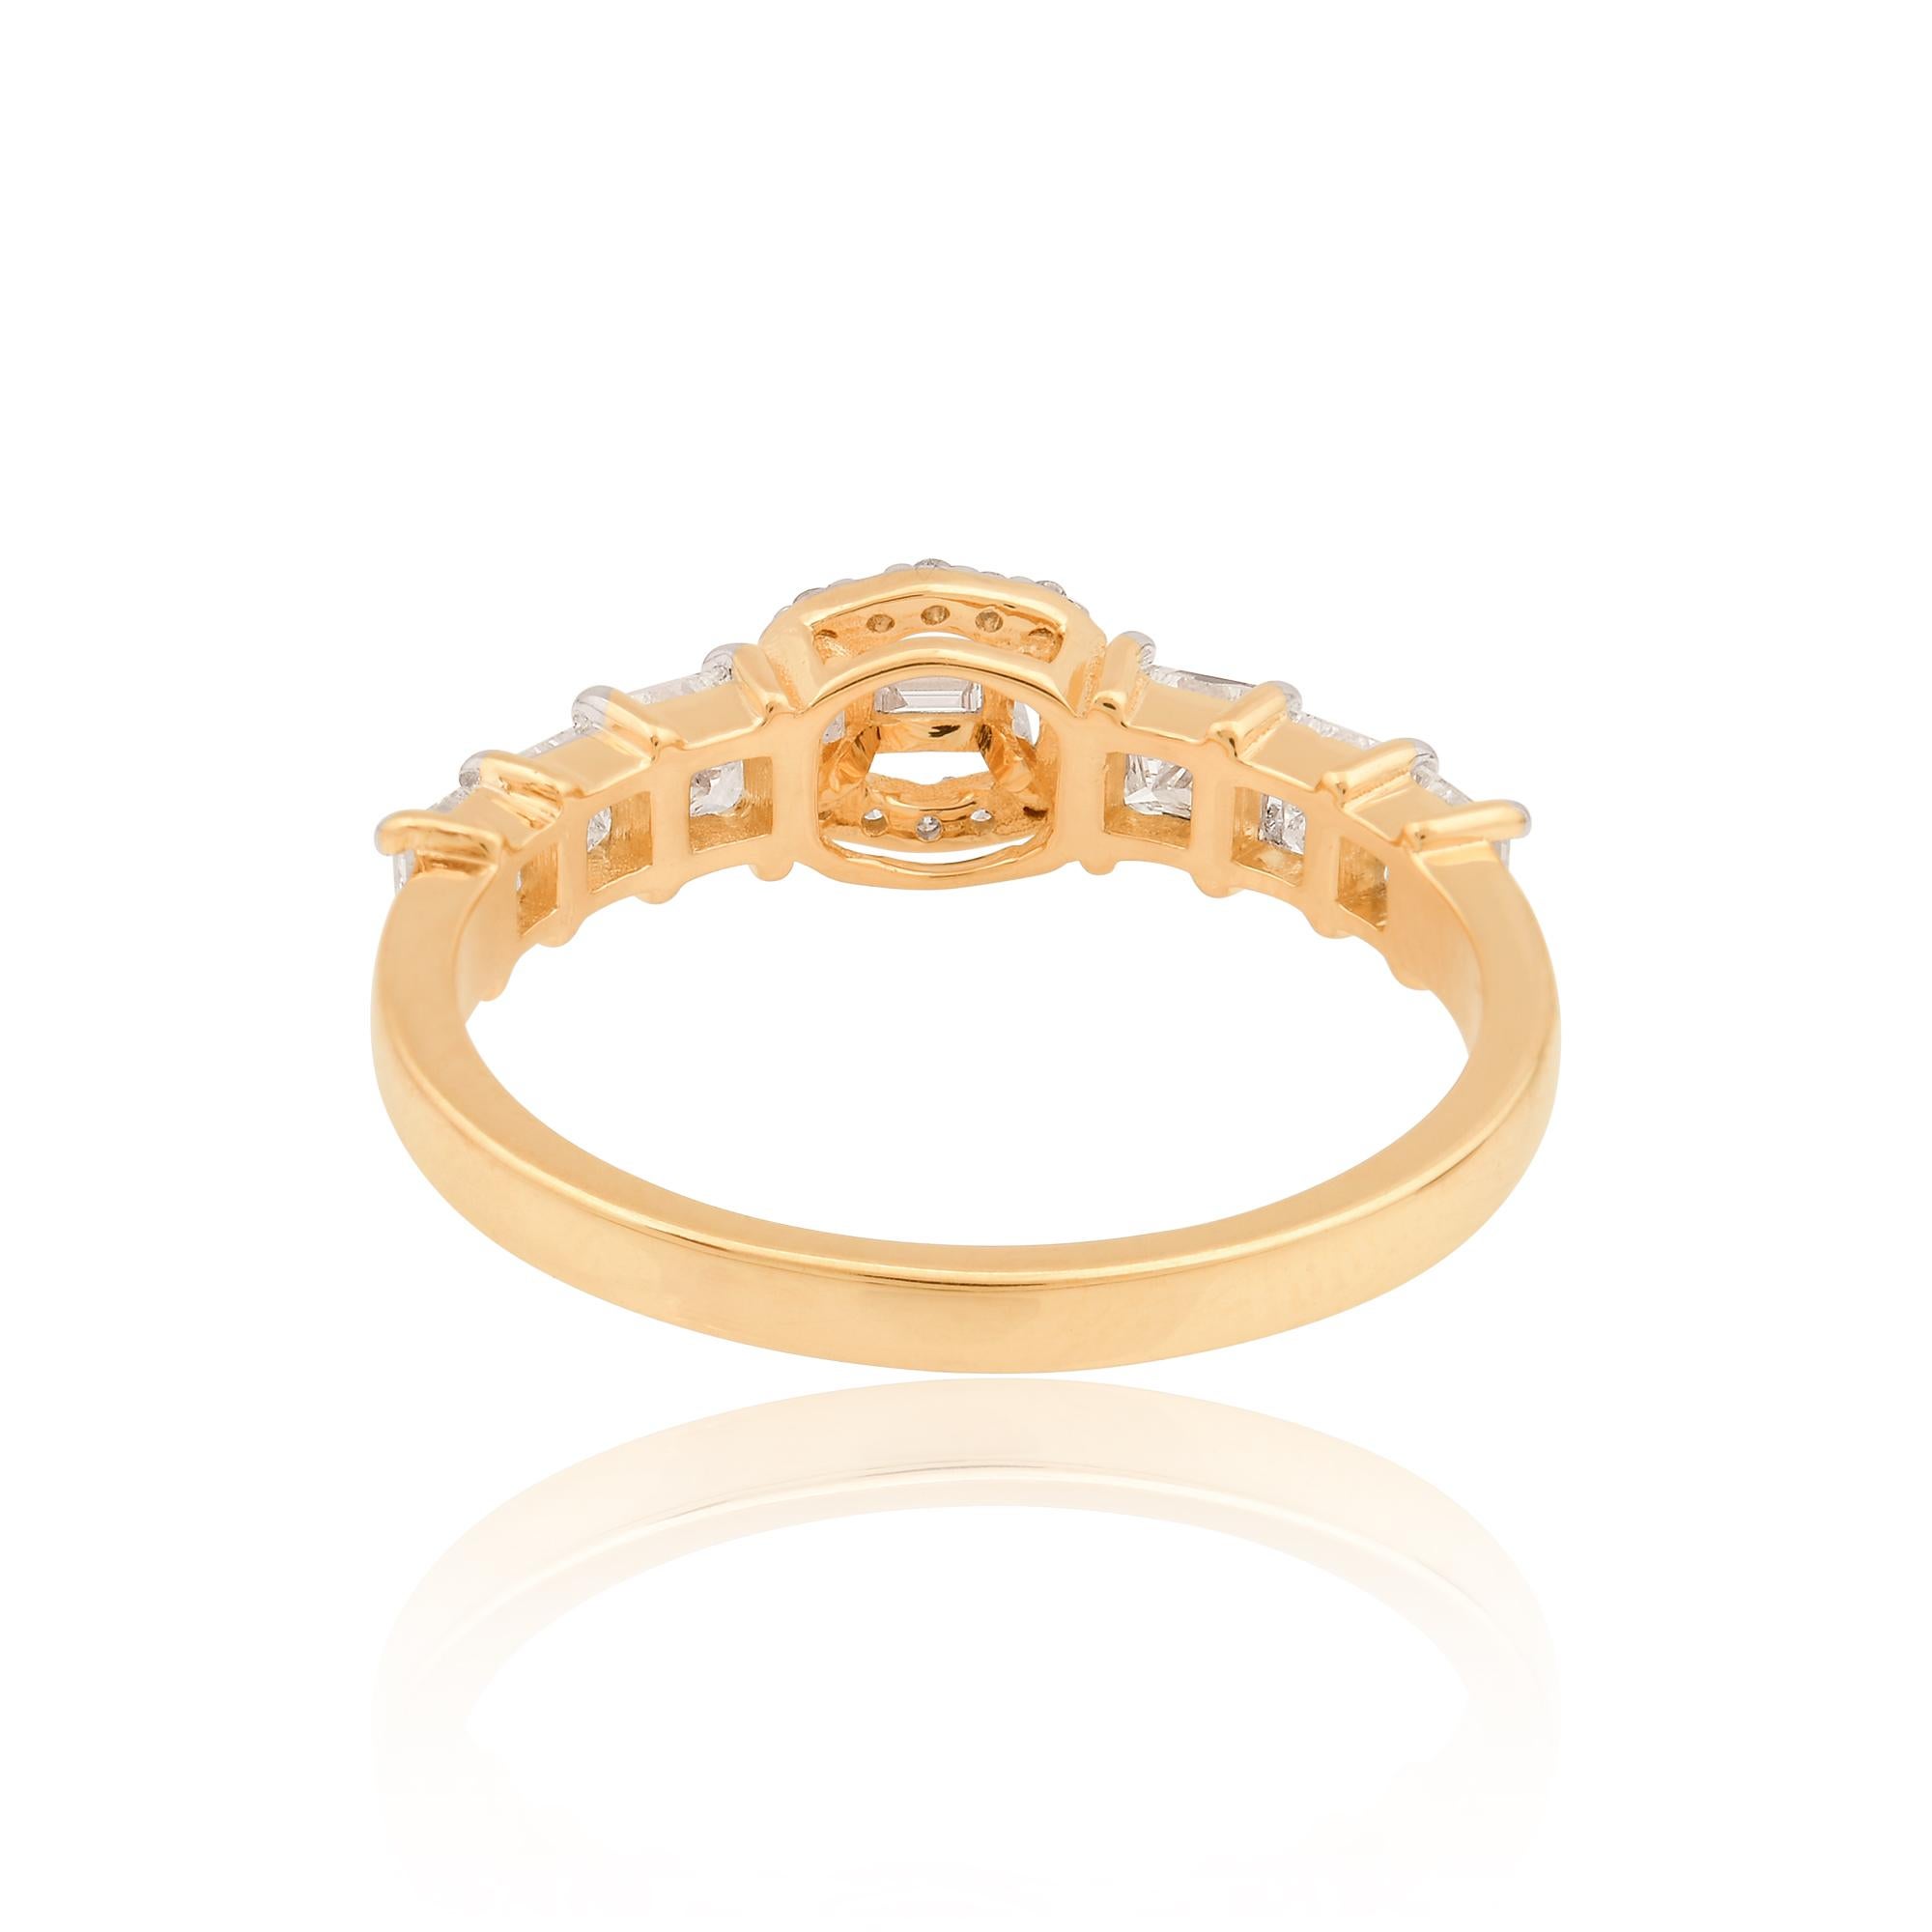 Emerald Cut 0.8 Carat Round Baguette Princess Cut Diamond Ring 14 Karat Yellow Gold Jewelry For Sale